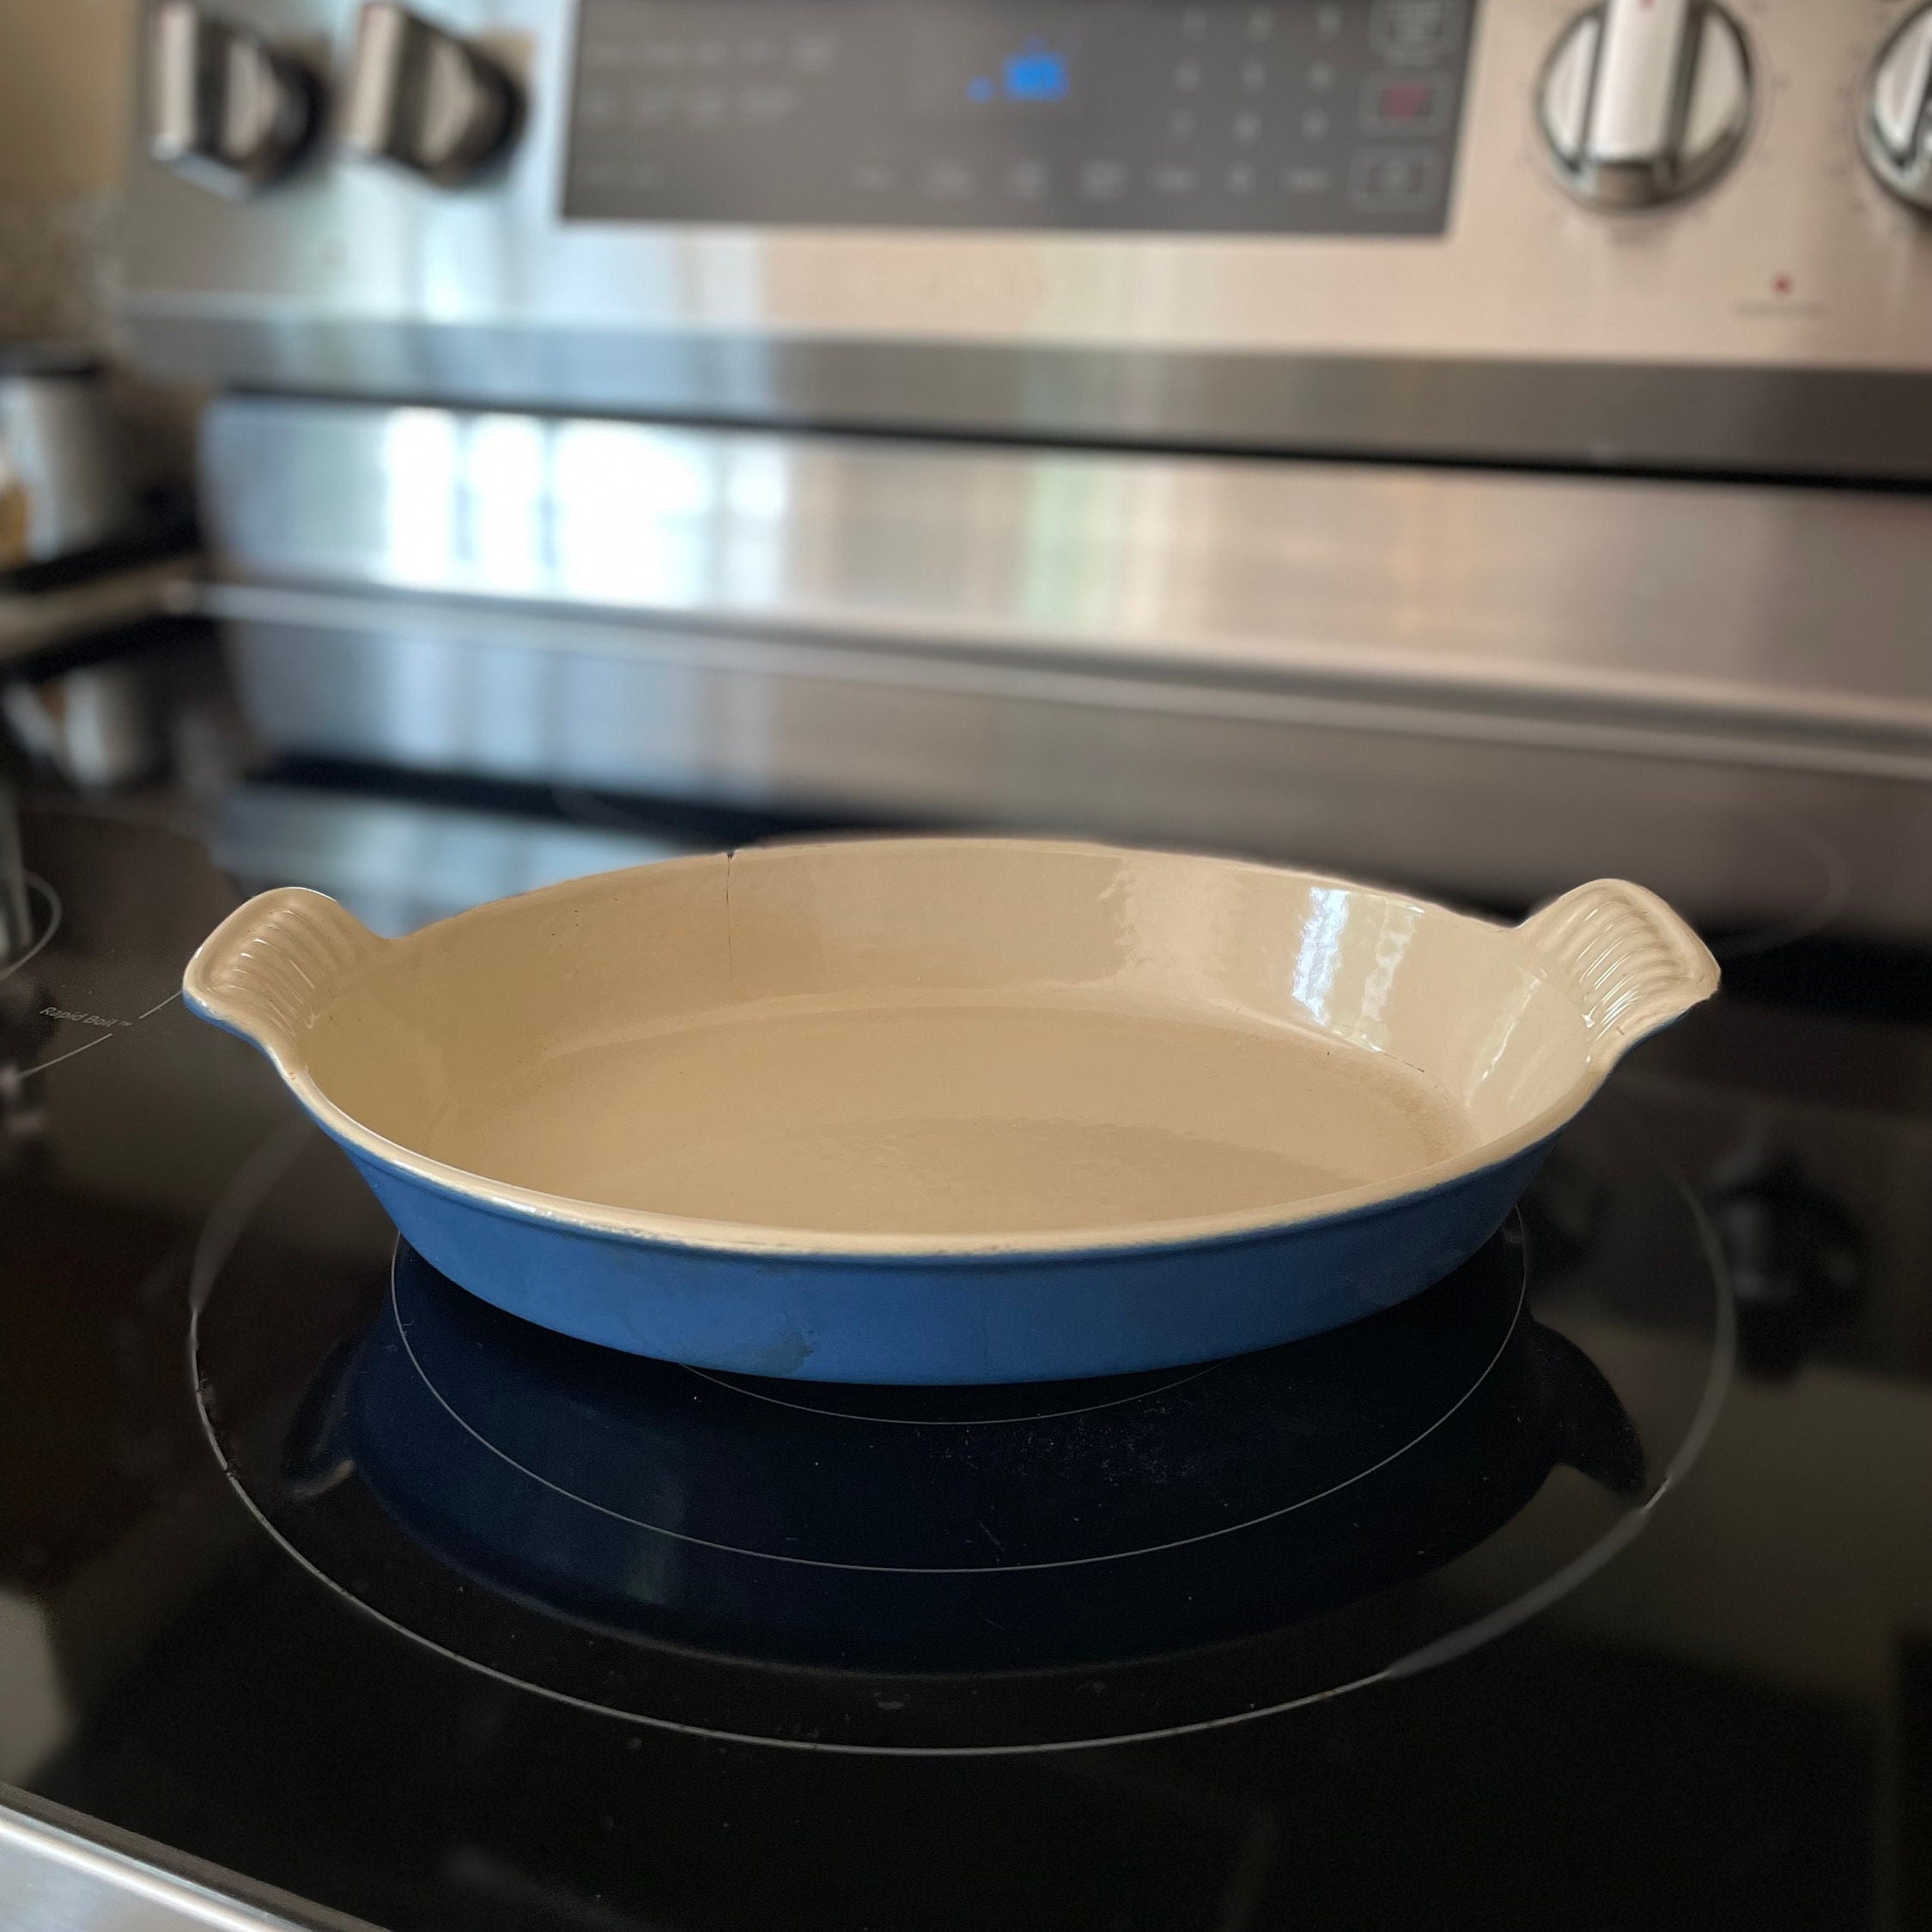 Le Creuset Stoneware 1-1/2-Quart 9-Inch Square Baking Dish, Cobalt Blue  (NEW)